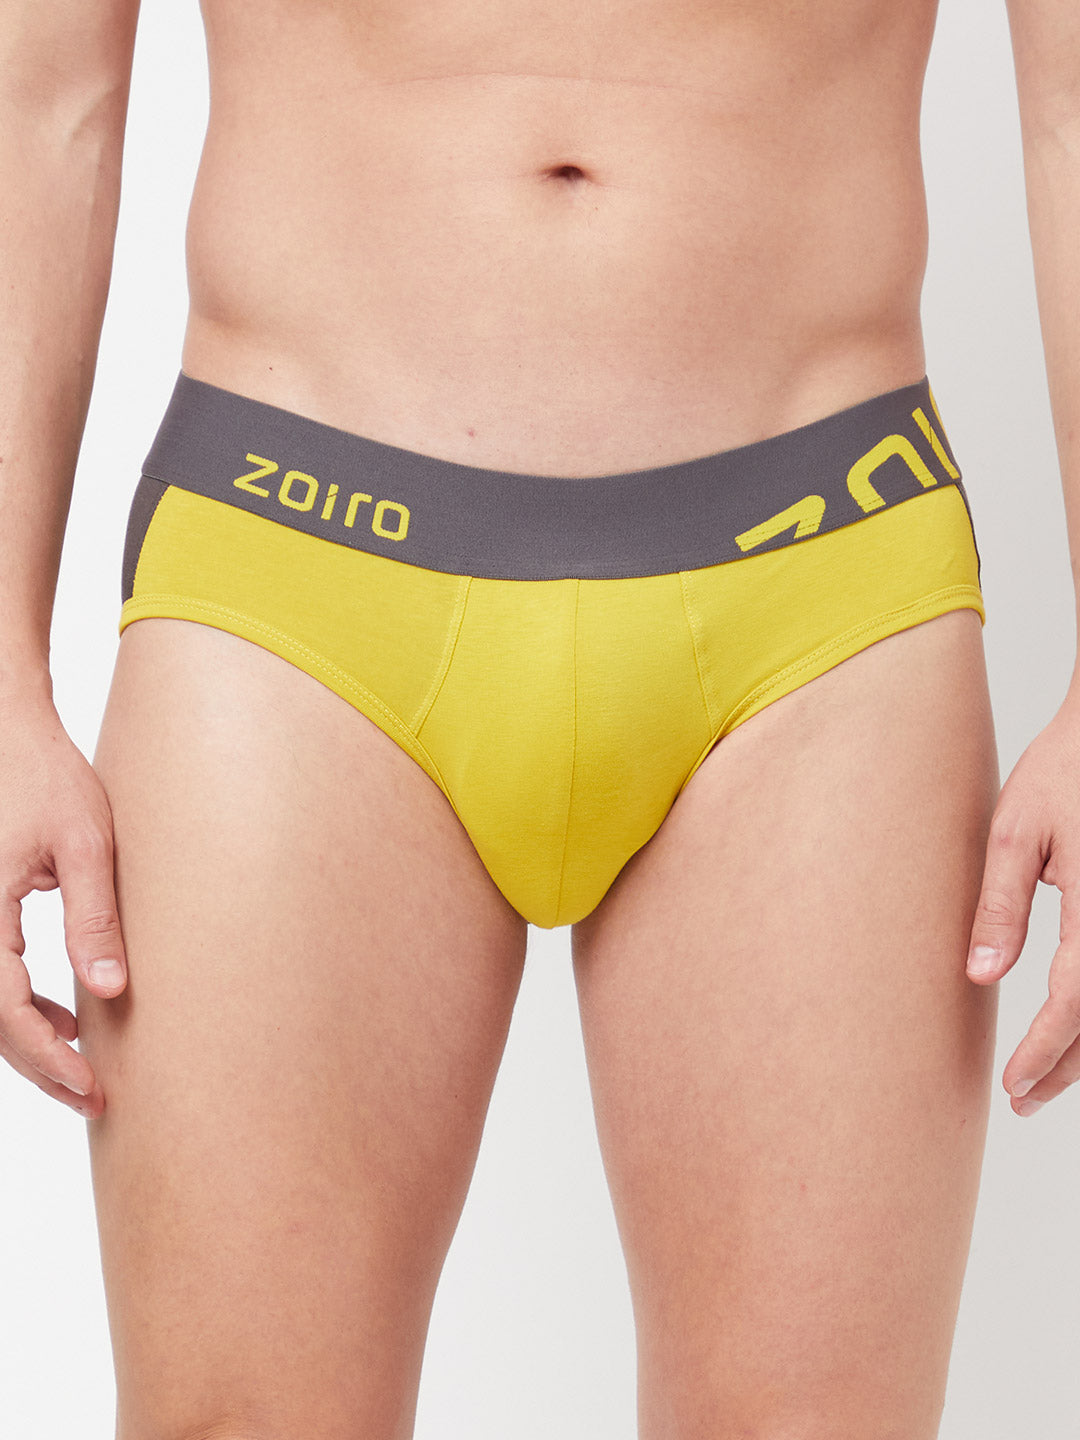 Yellow Cotton Men's Underwear – Drawlz Brand Co.